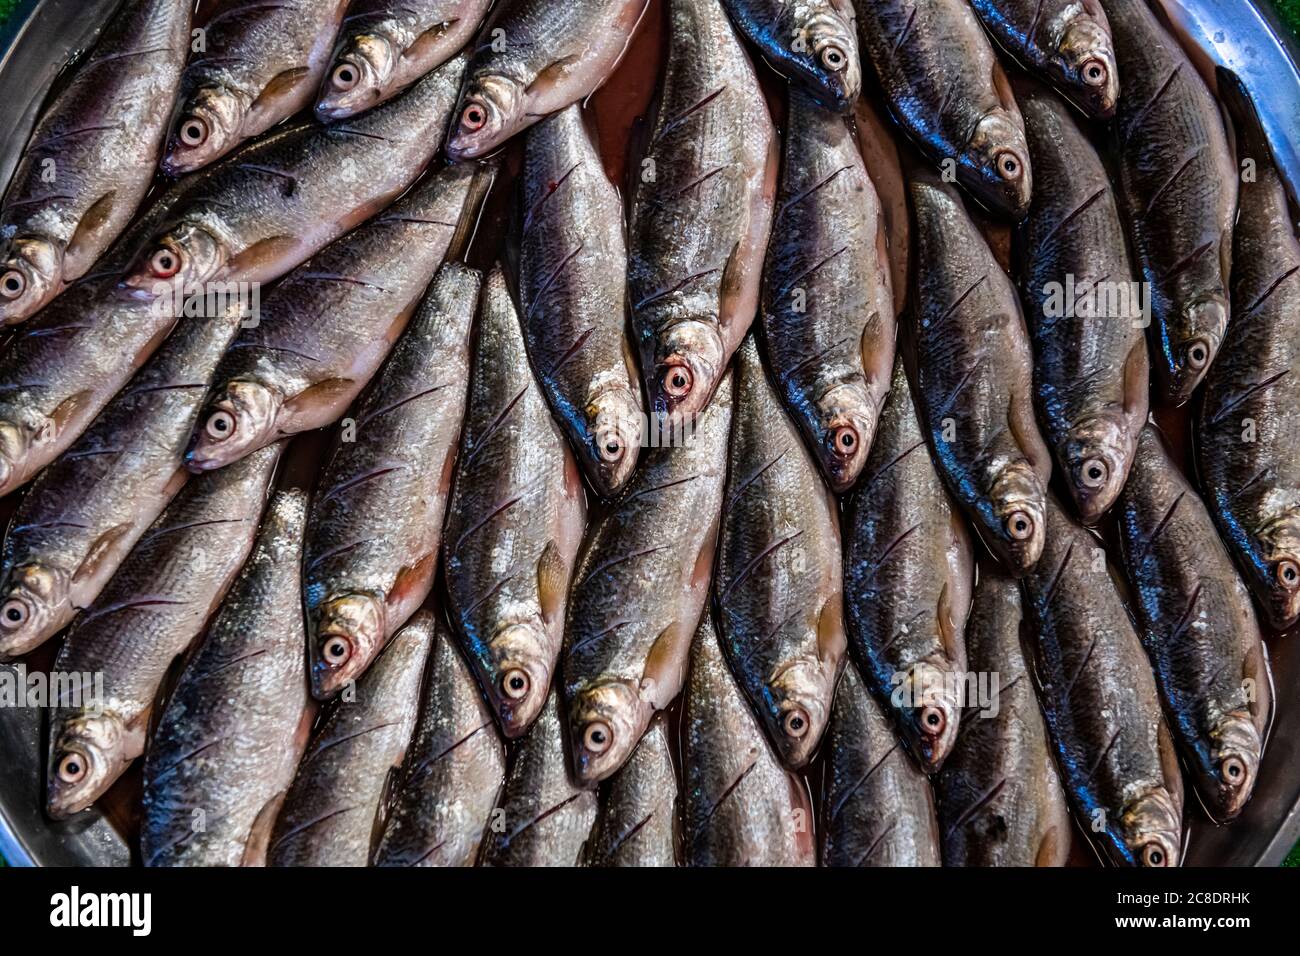 Myanmar, estado de Kachin, Munch de pescado fresco para la venta Foto de stock